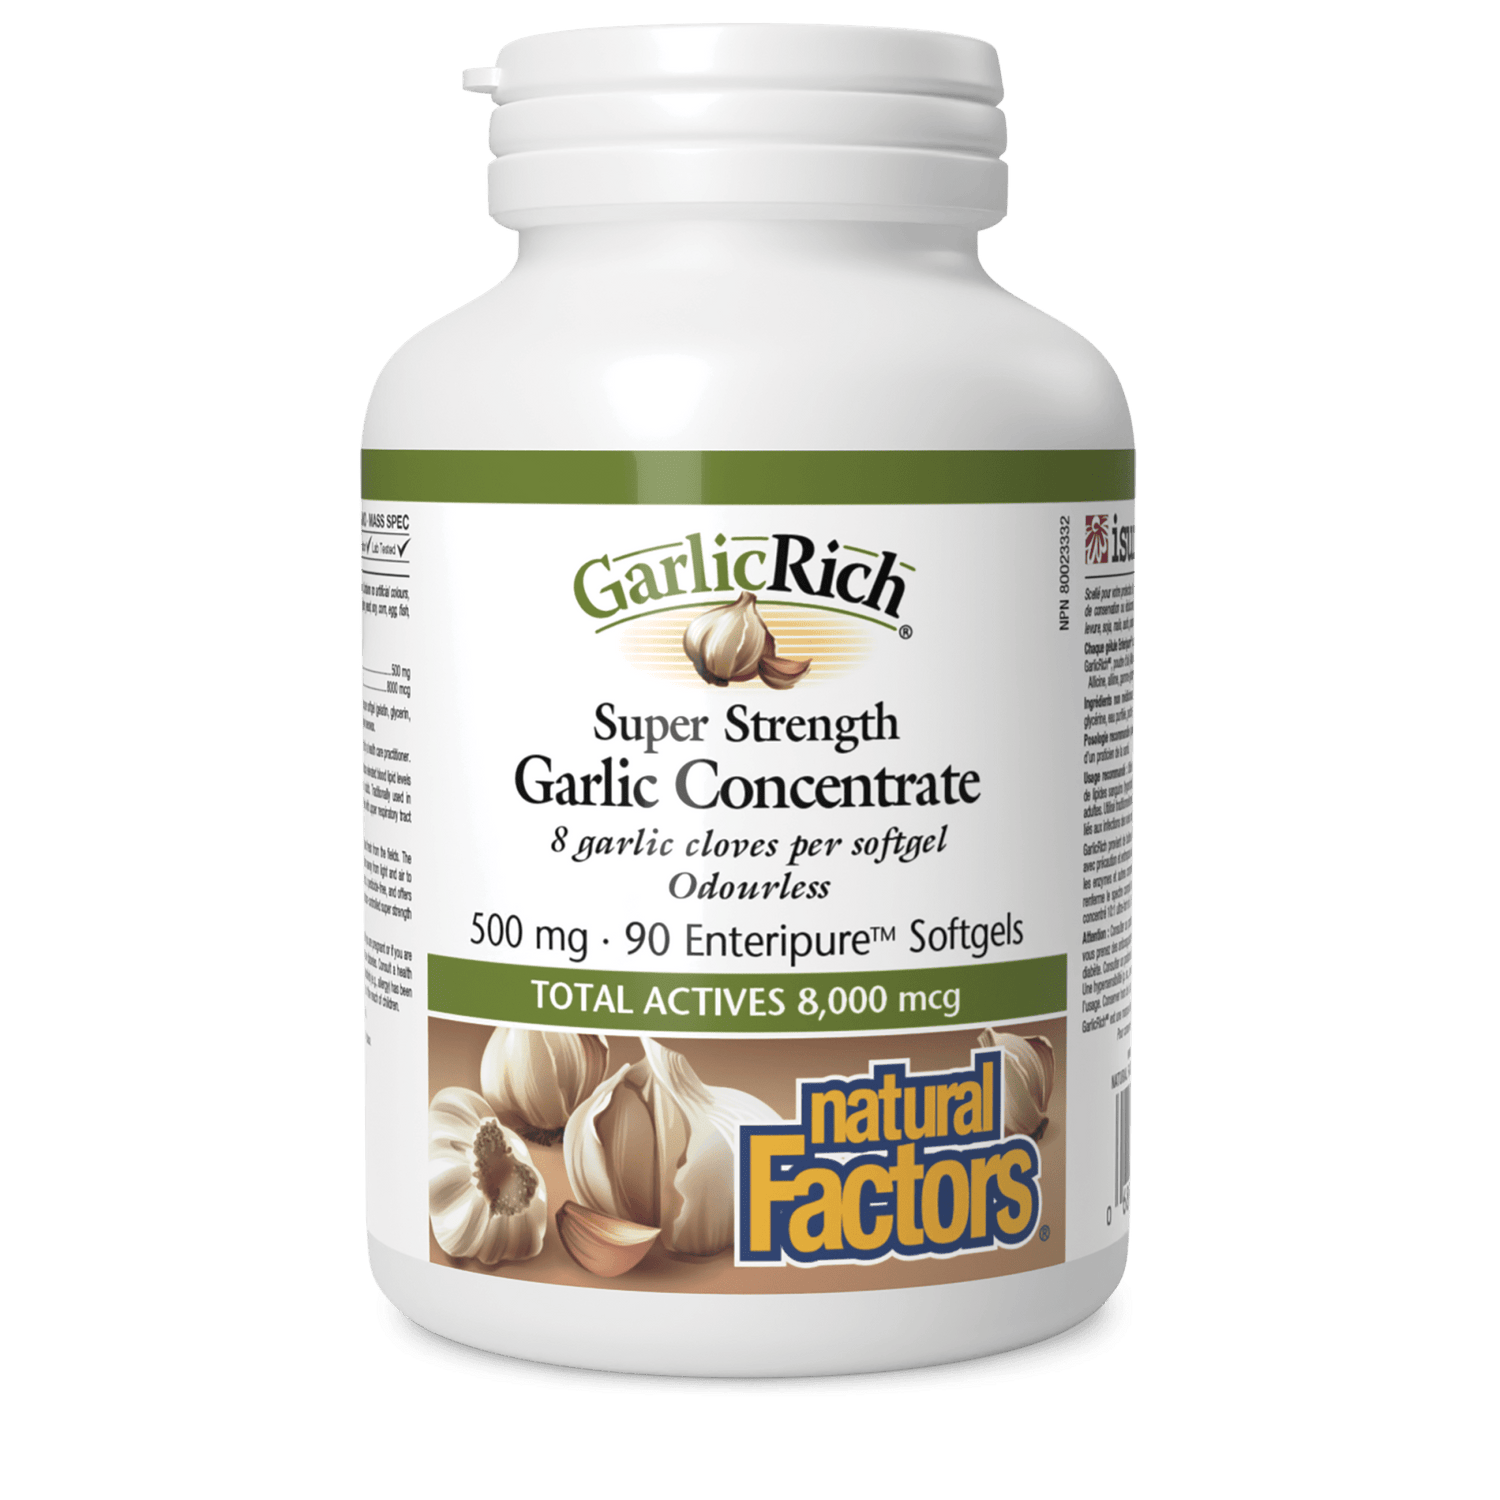 GarlicRich Super Strength Garlic Concentrate 500 mg, Natural Factors|v|image|2332